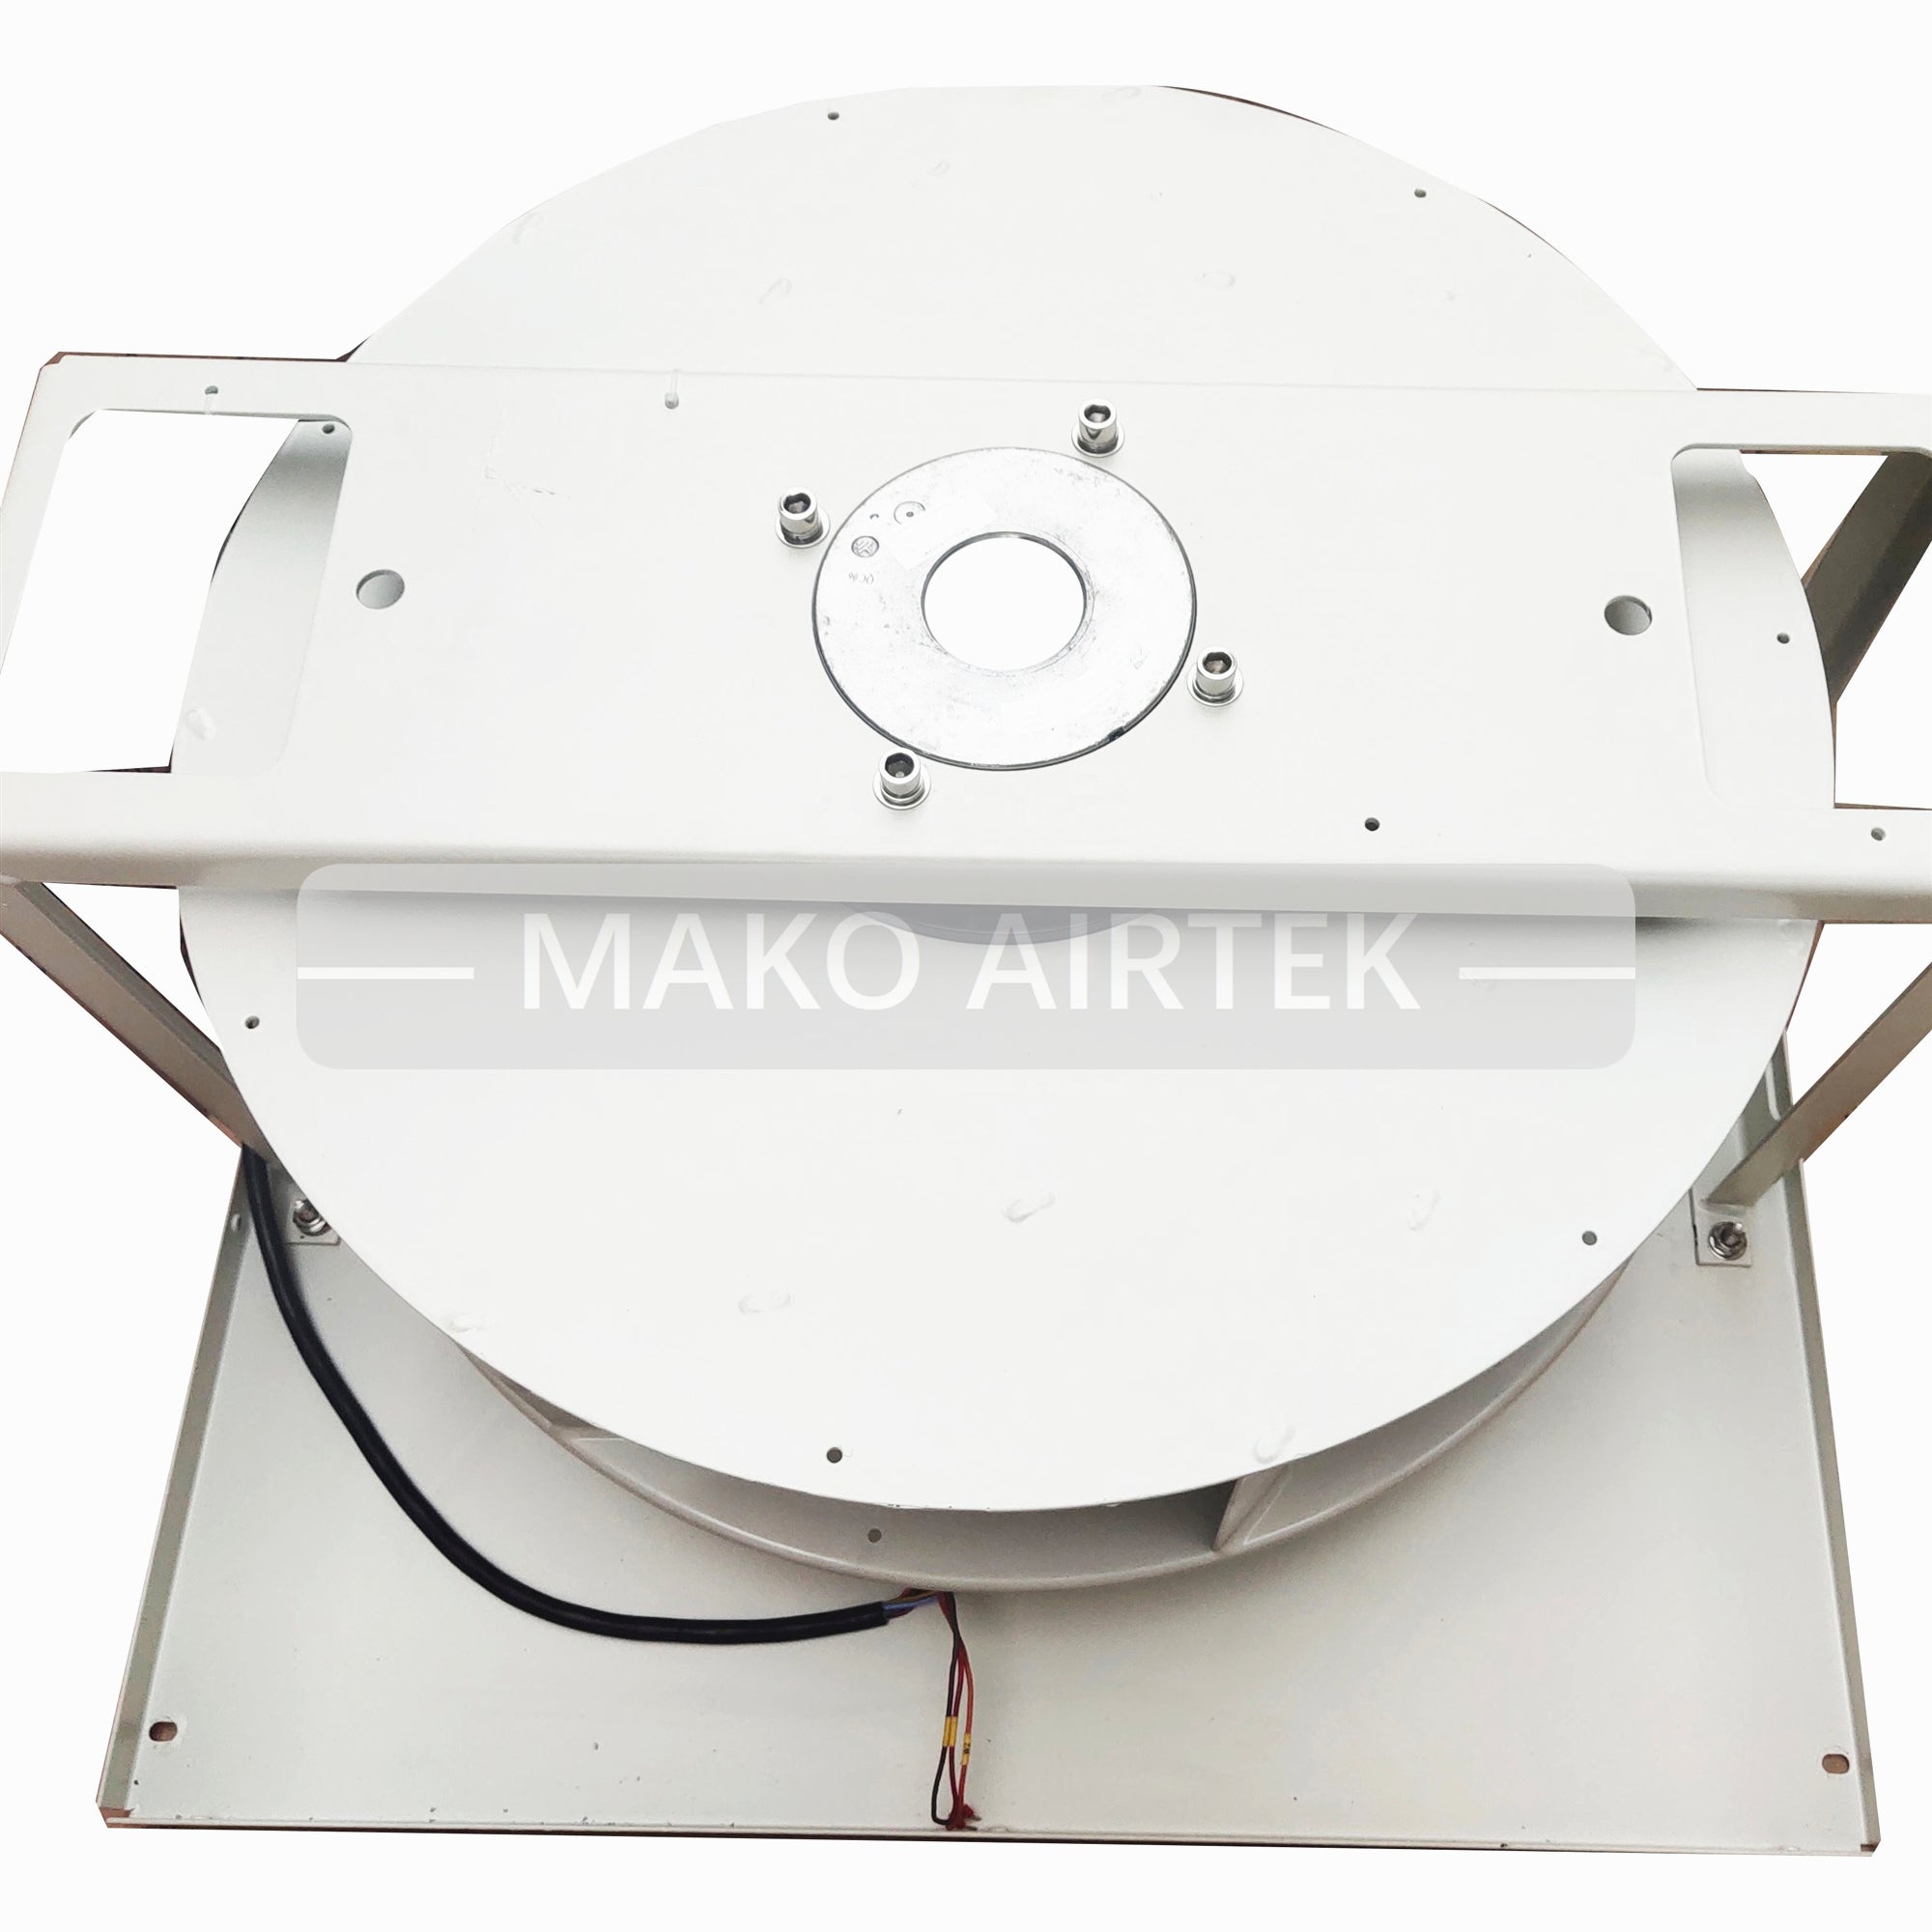 Spare Parts for Air Compressor & Industrial Machinery – MAKO AIRTEK